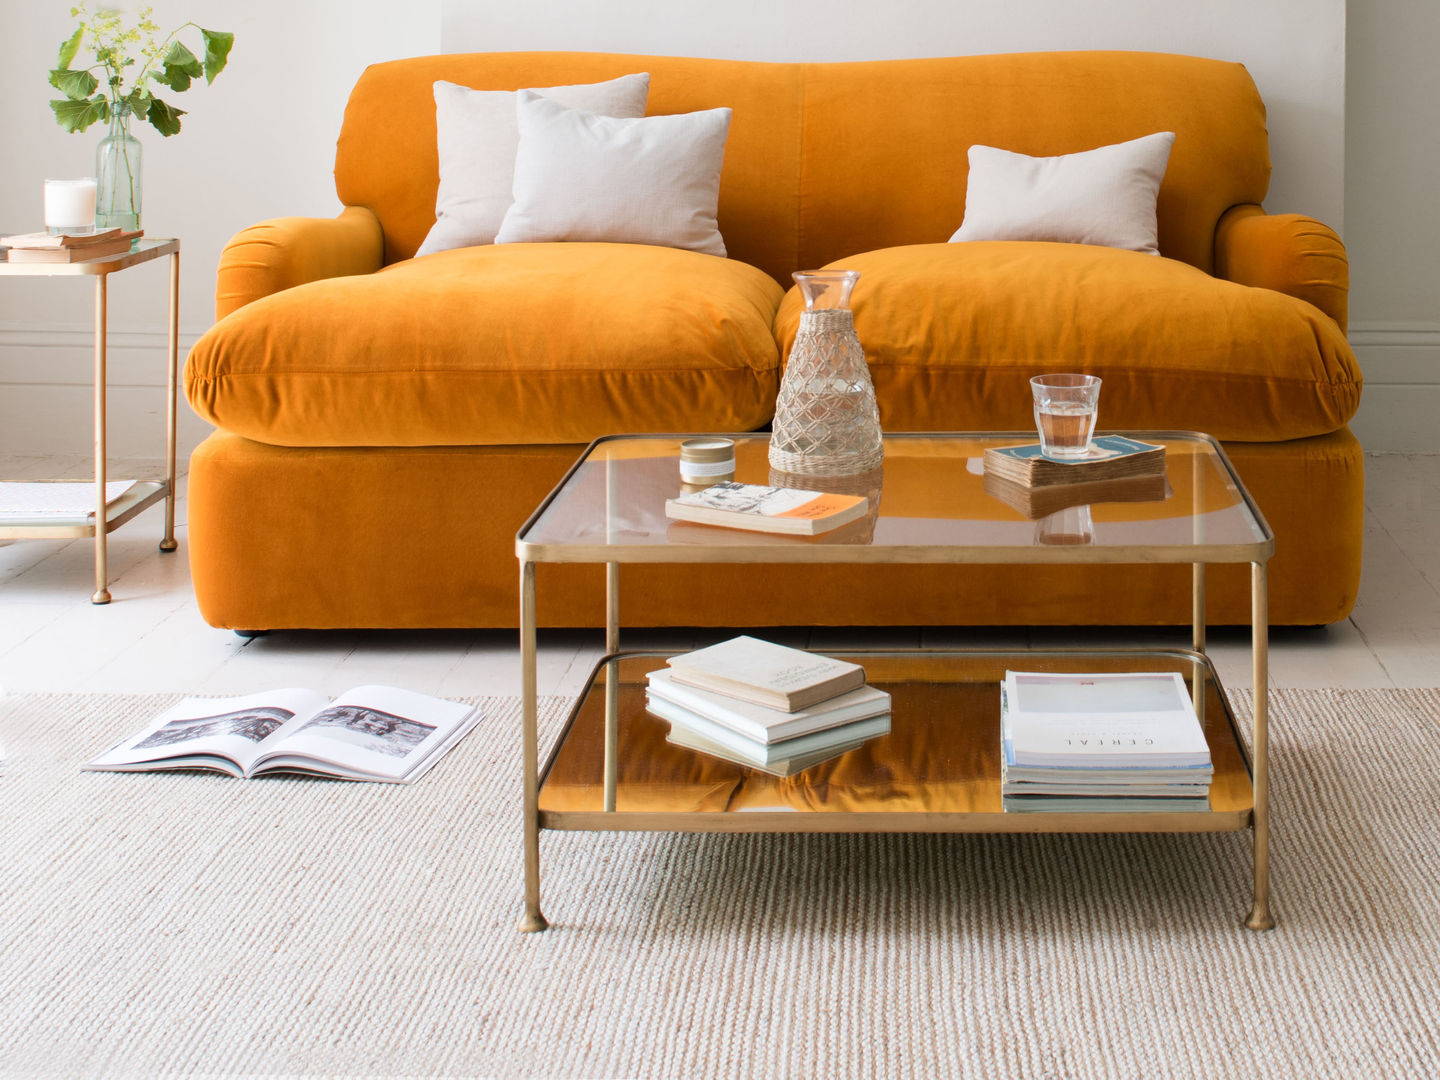 Wonder-Boy coffee table Loaf 모던스타일 거실 brass,glass,coffee table,table,living room,orange sofa,sofa